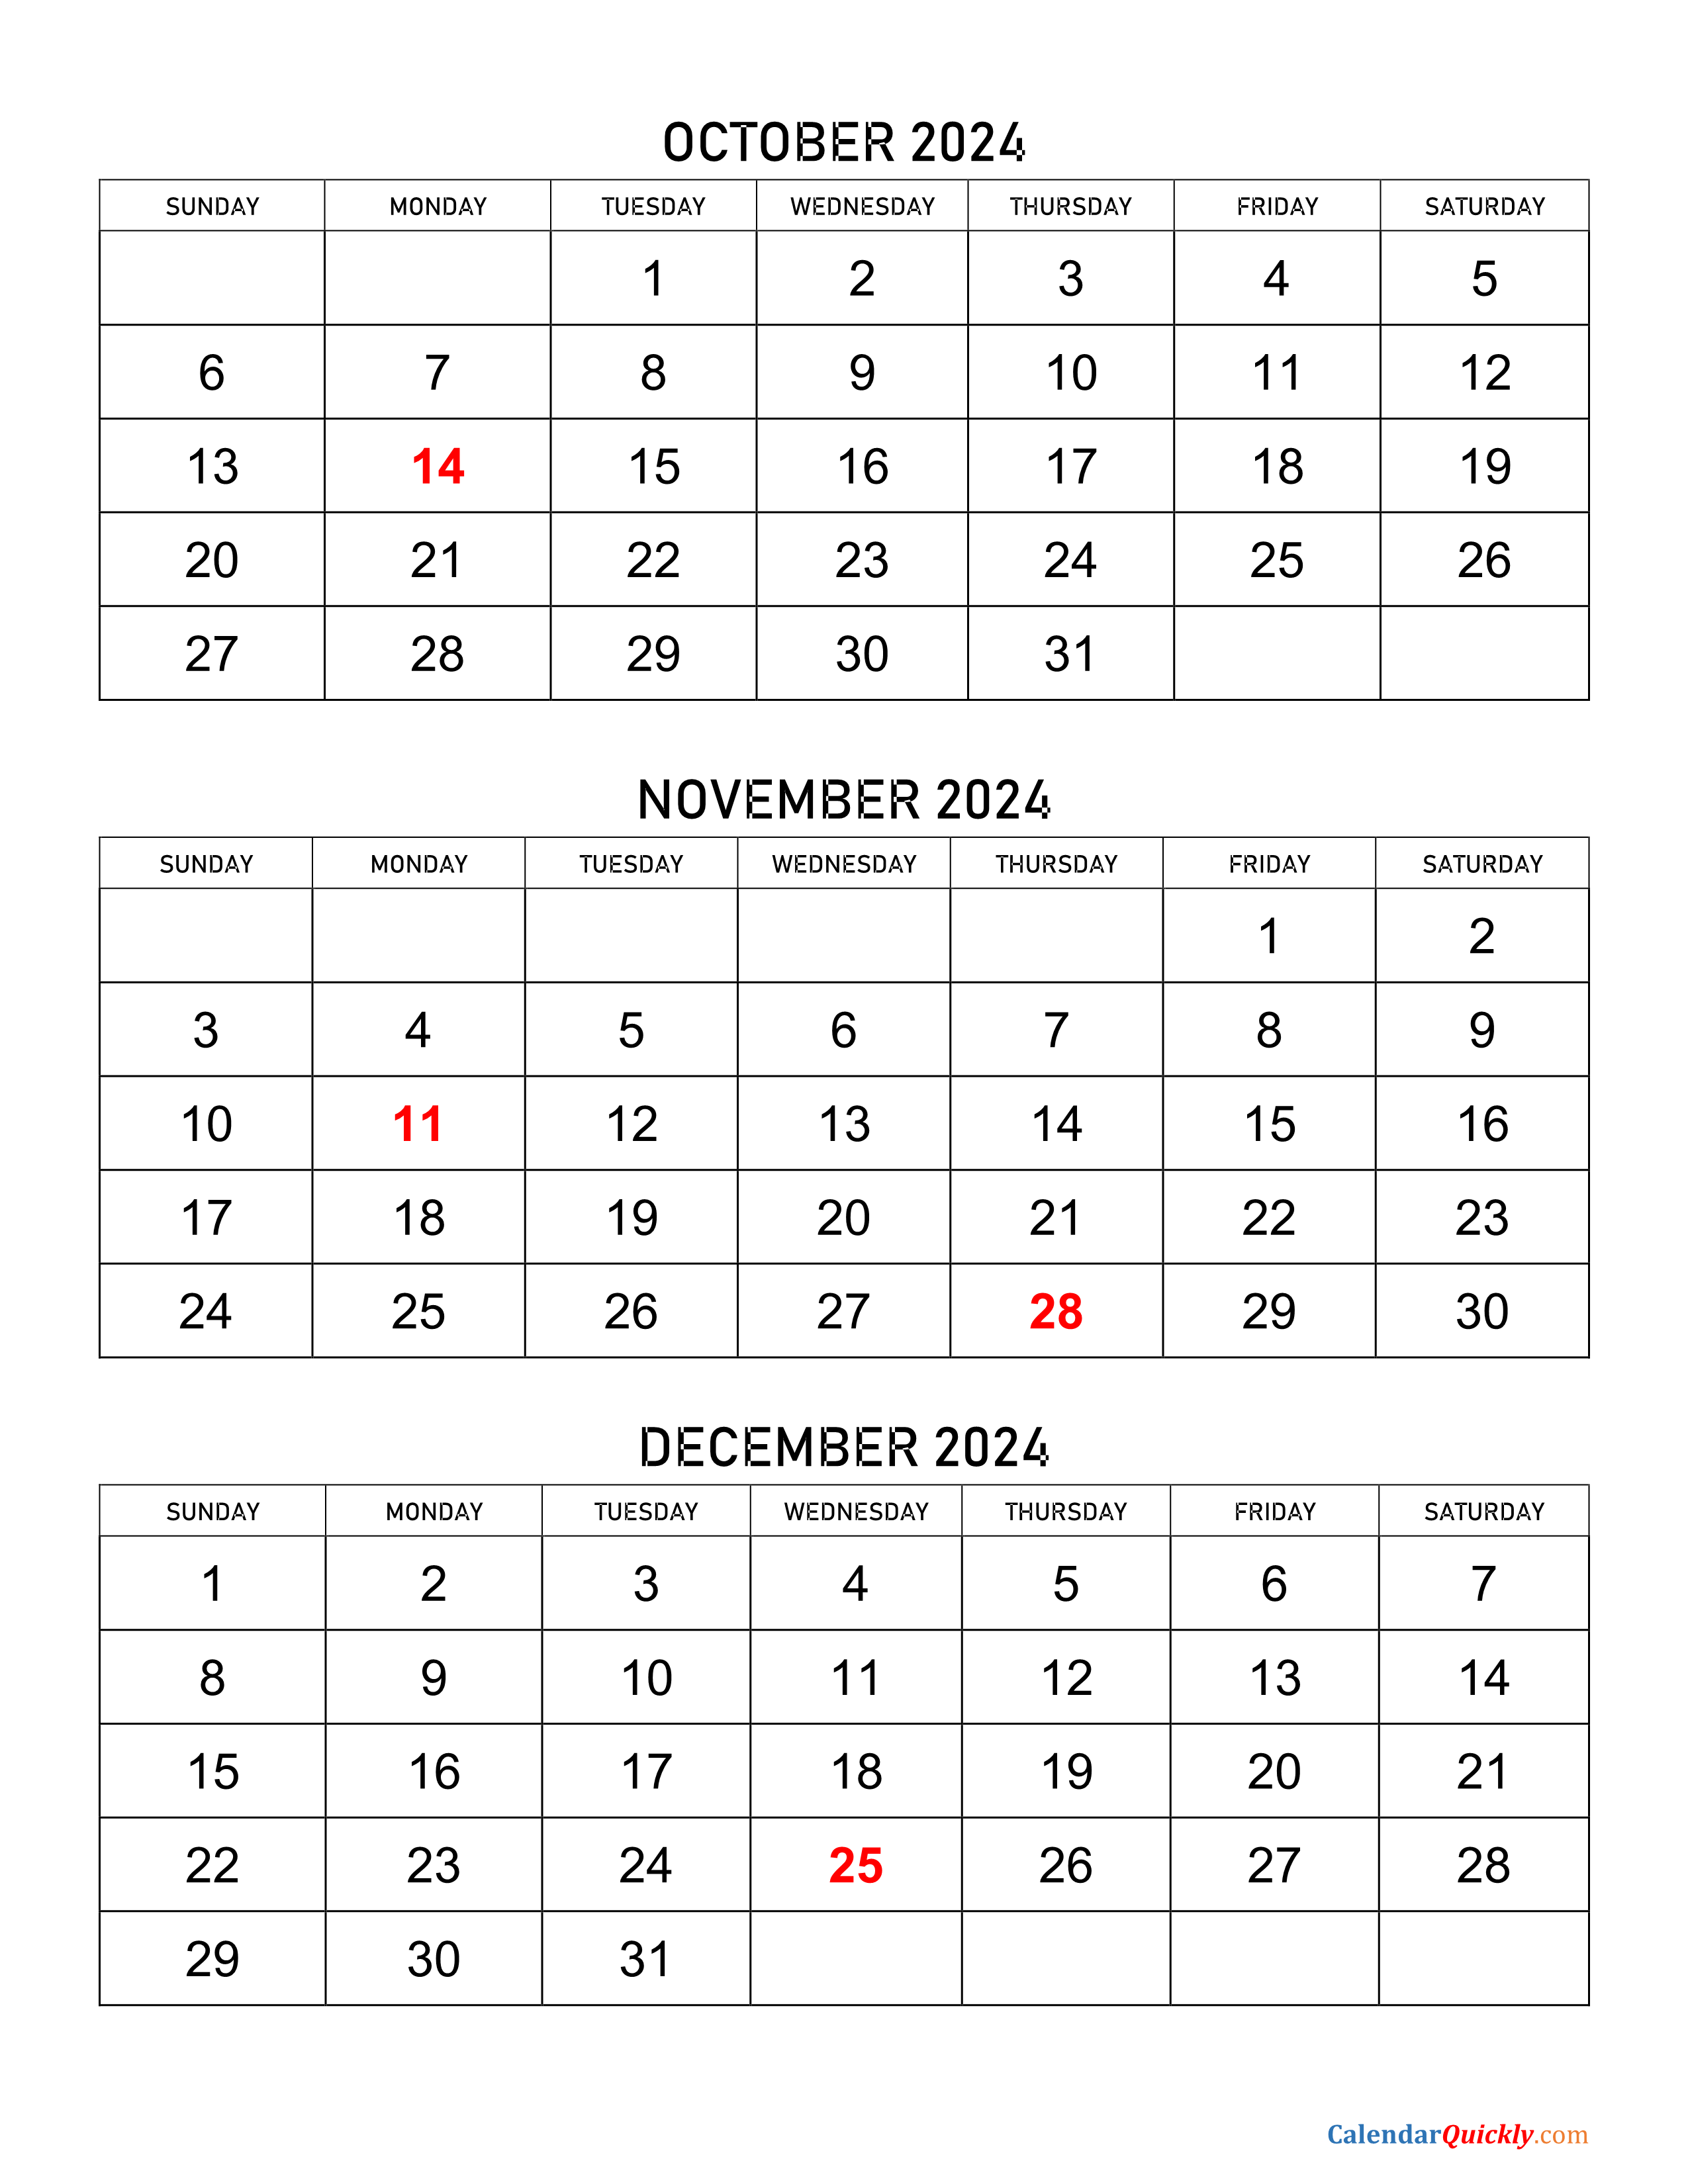 2024 October November December Calendar Printable 2024 CALENDAR PRINTABLE - Free Printable Blank Oct 2024 Calendar